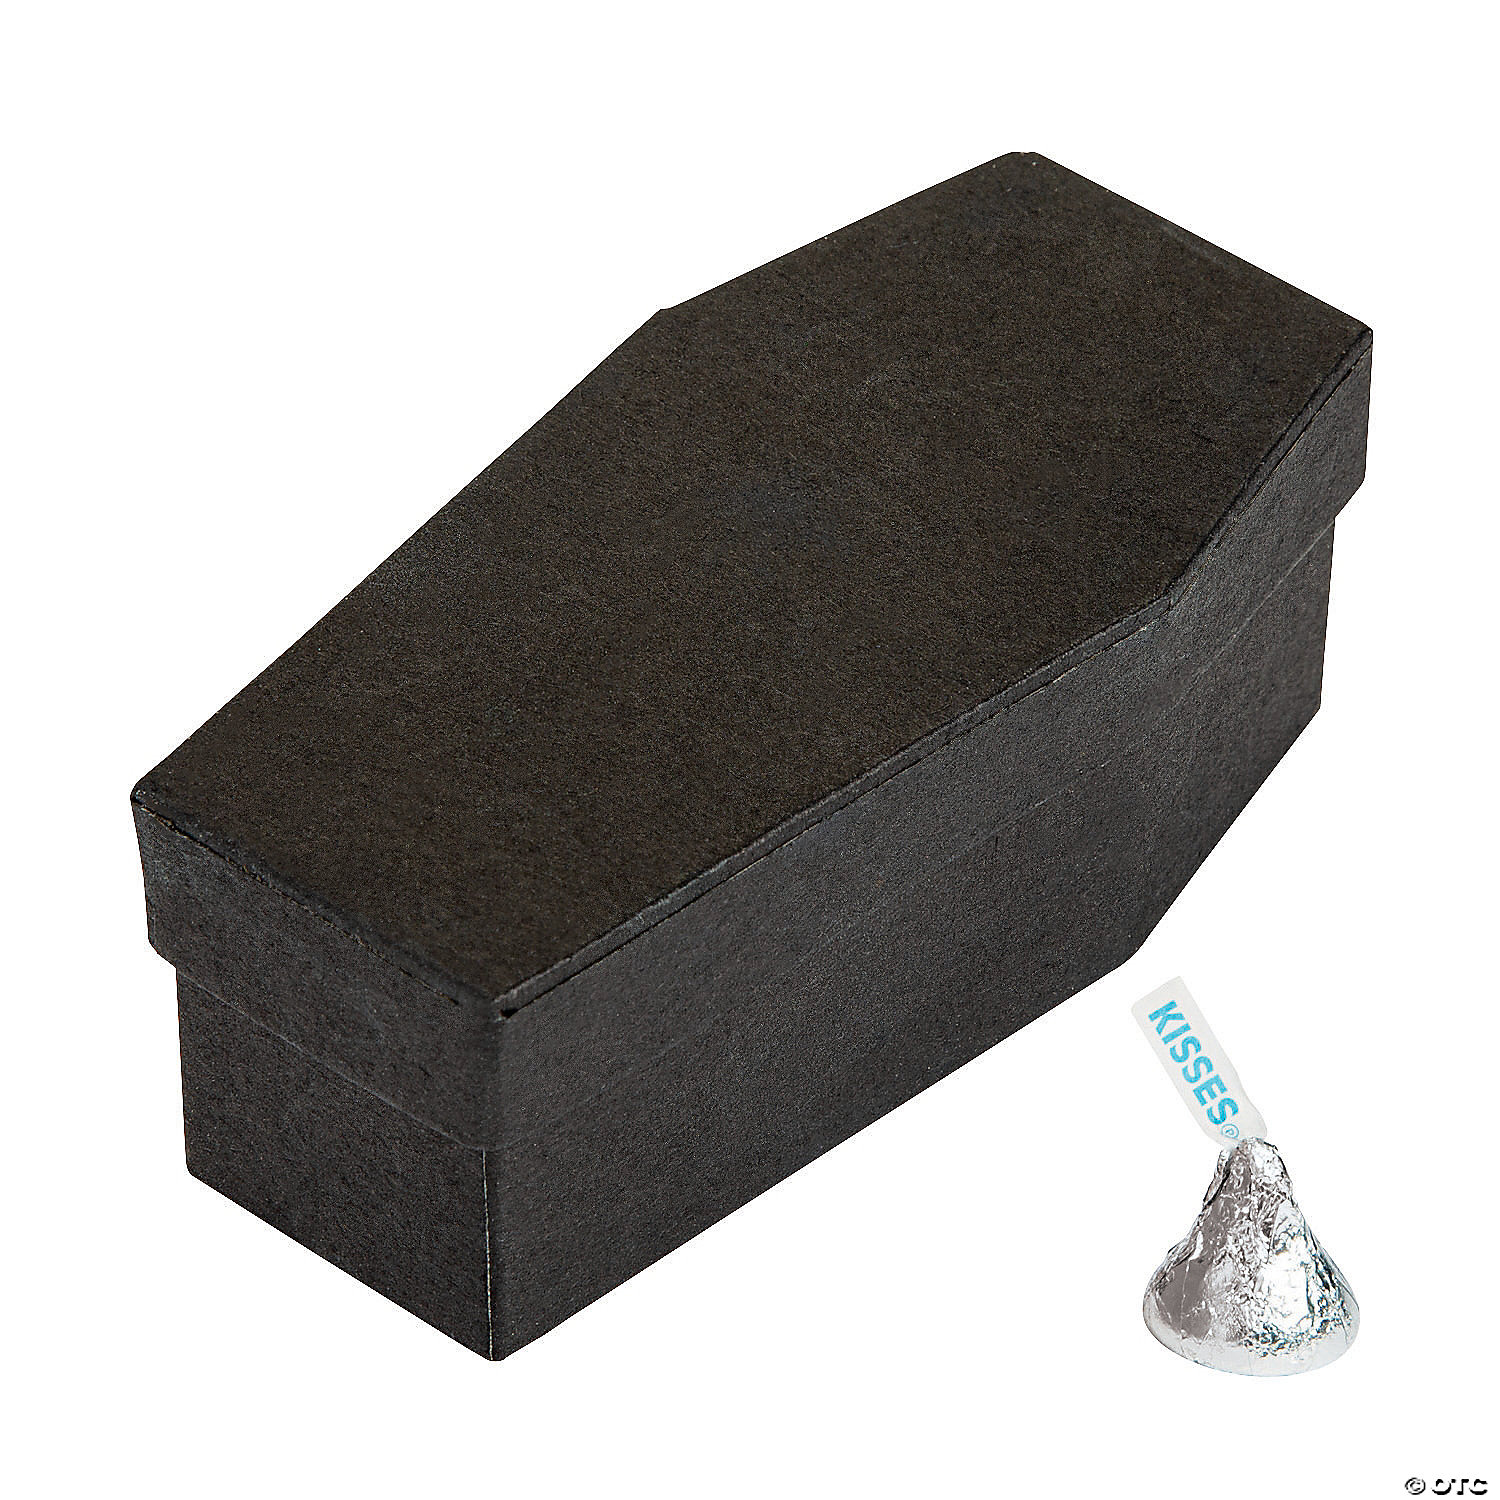 16 cm / 6.2 inch Black Box coffin casket favor box halloween gift candy box 